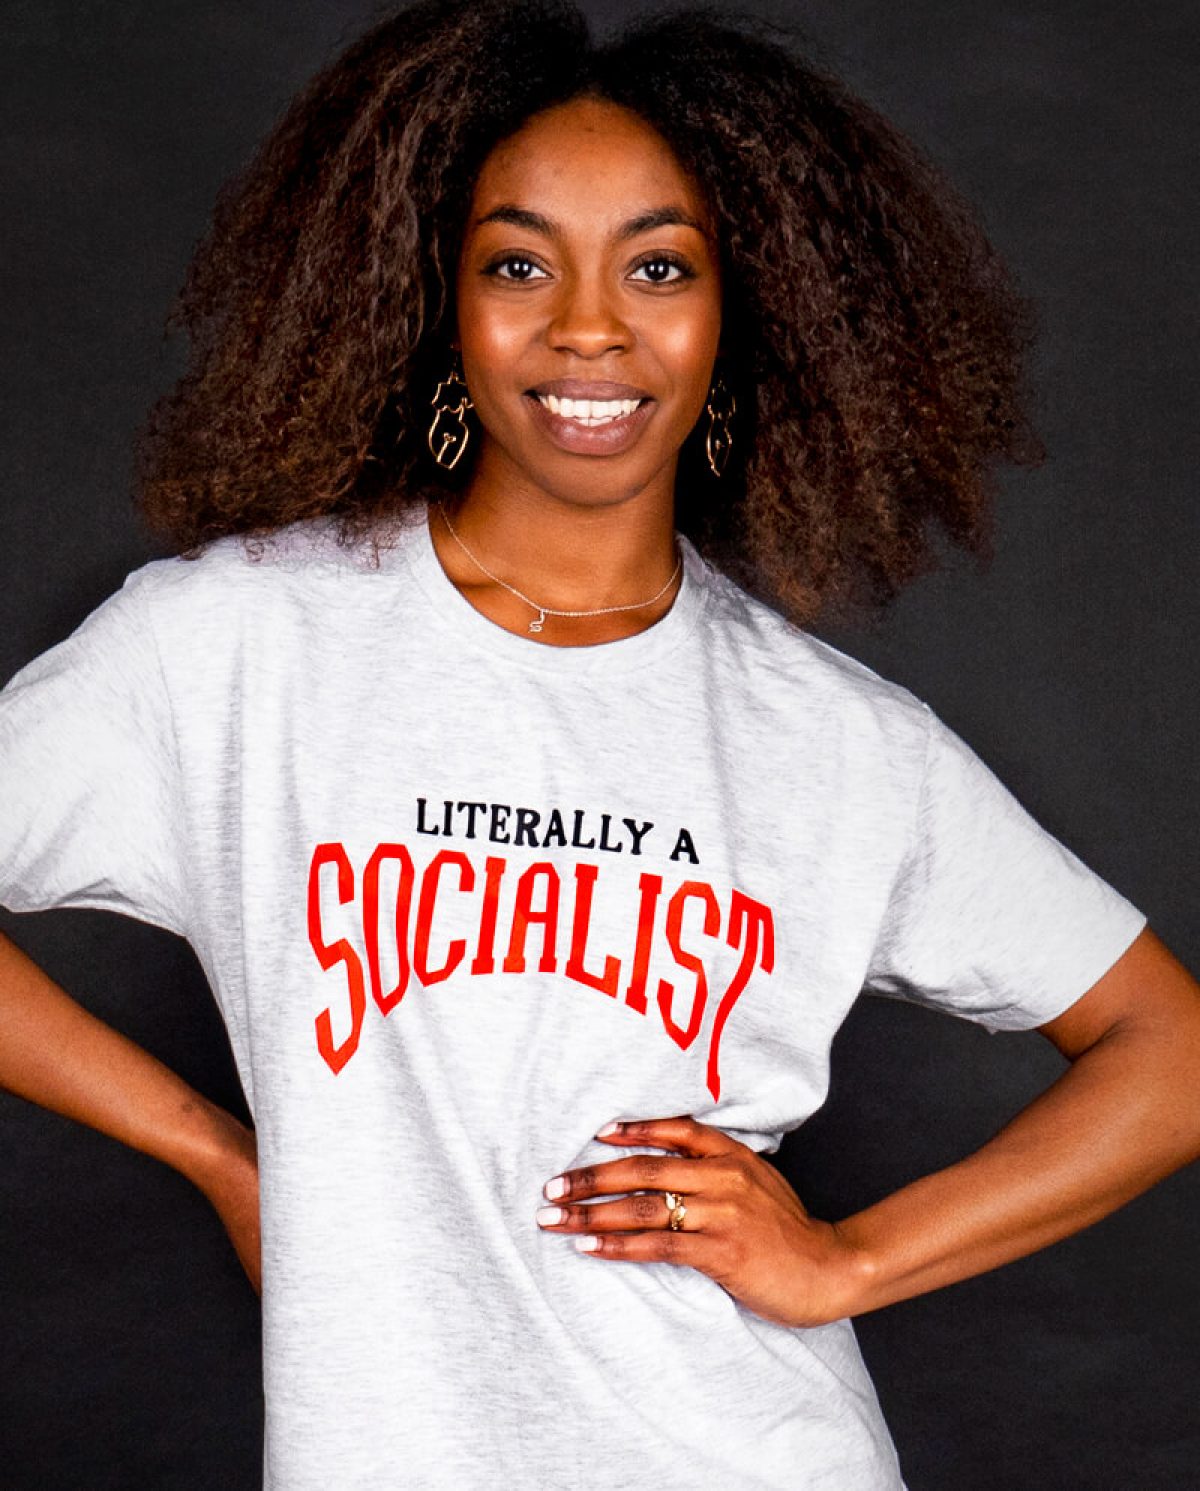 Literally a socialist -